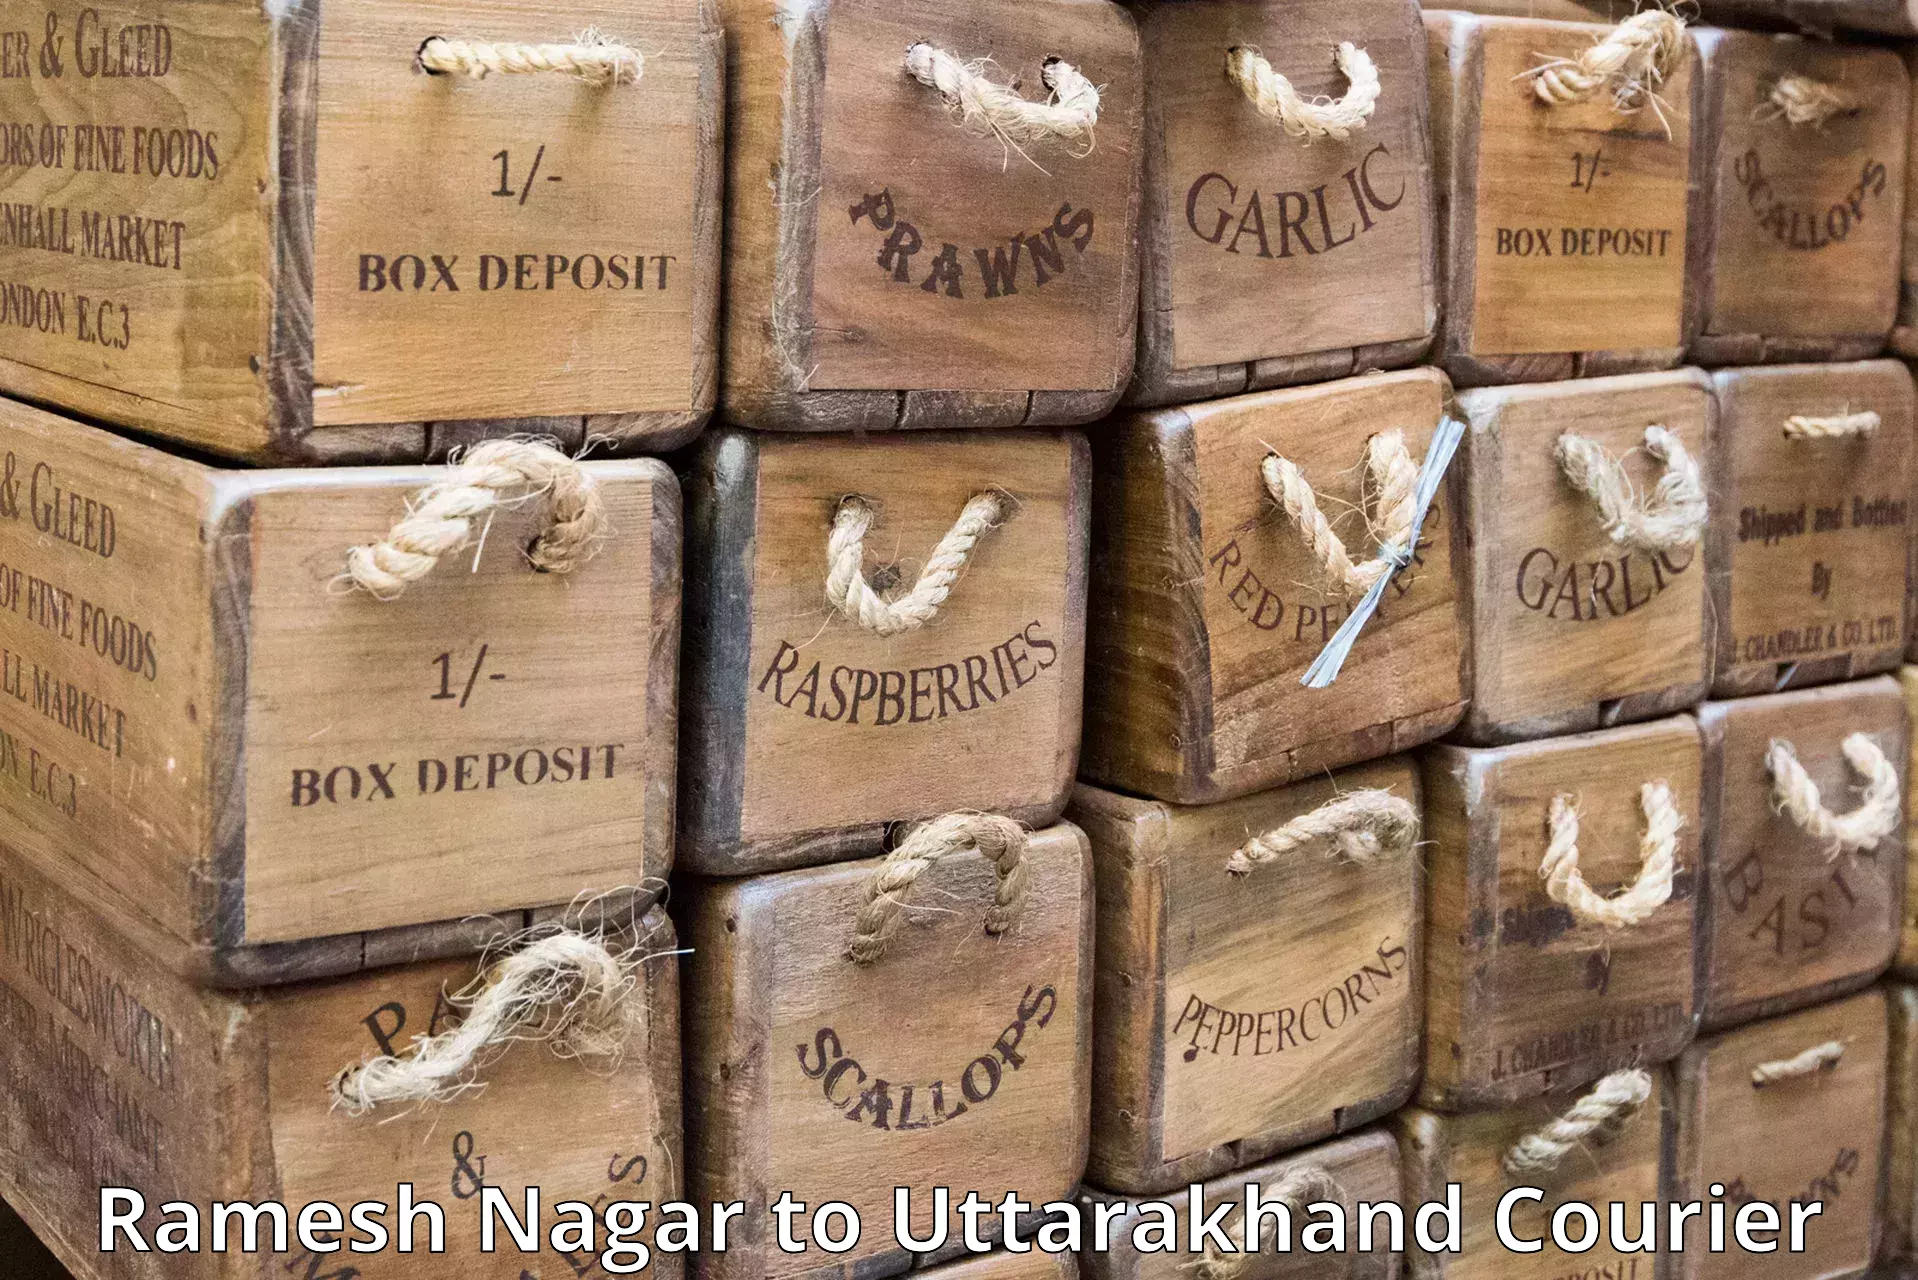 Cash on delivery service Ramesh Nagar to Tehri